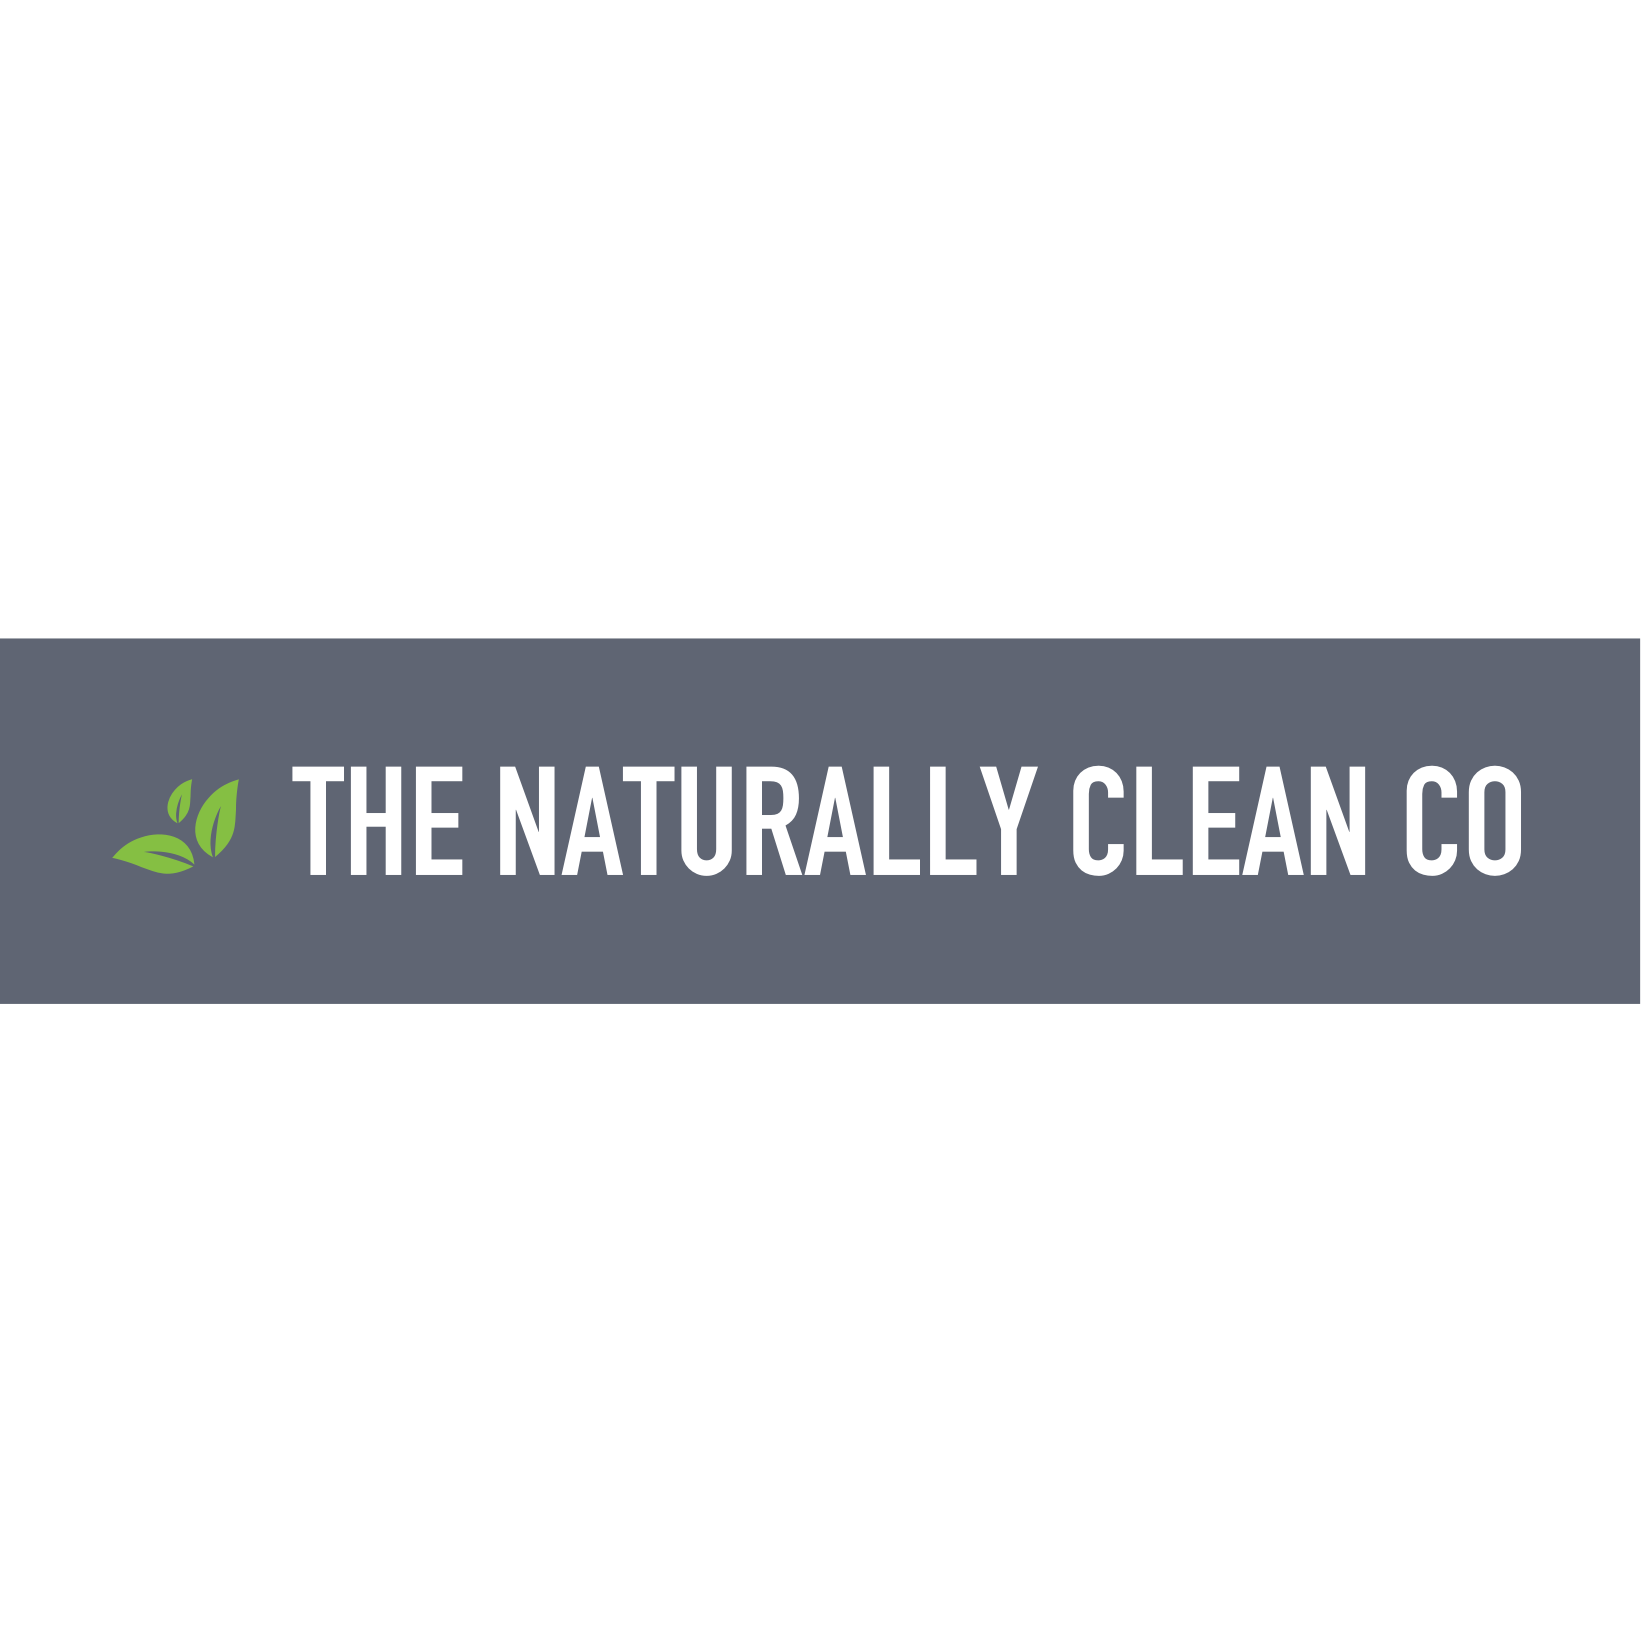 The Naturally Clean Co - Wynnum, QLD 4178 - 1800 331 745 | ShowMeLocal.com